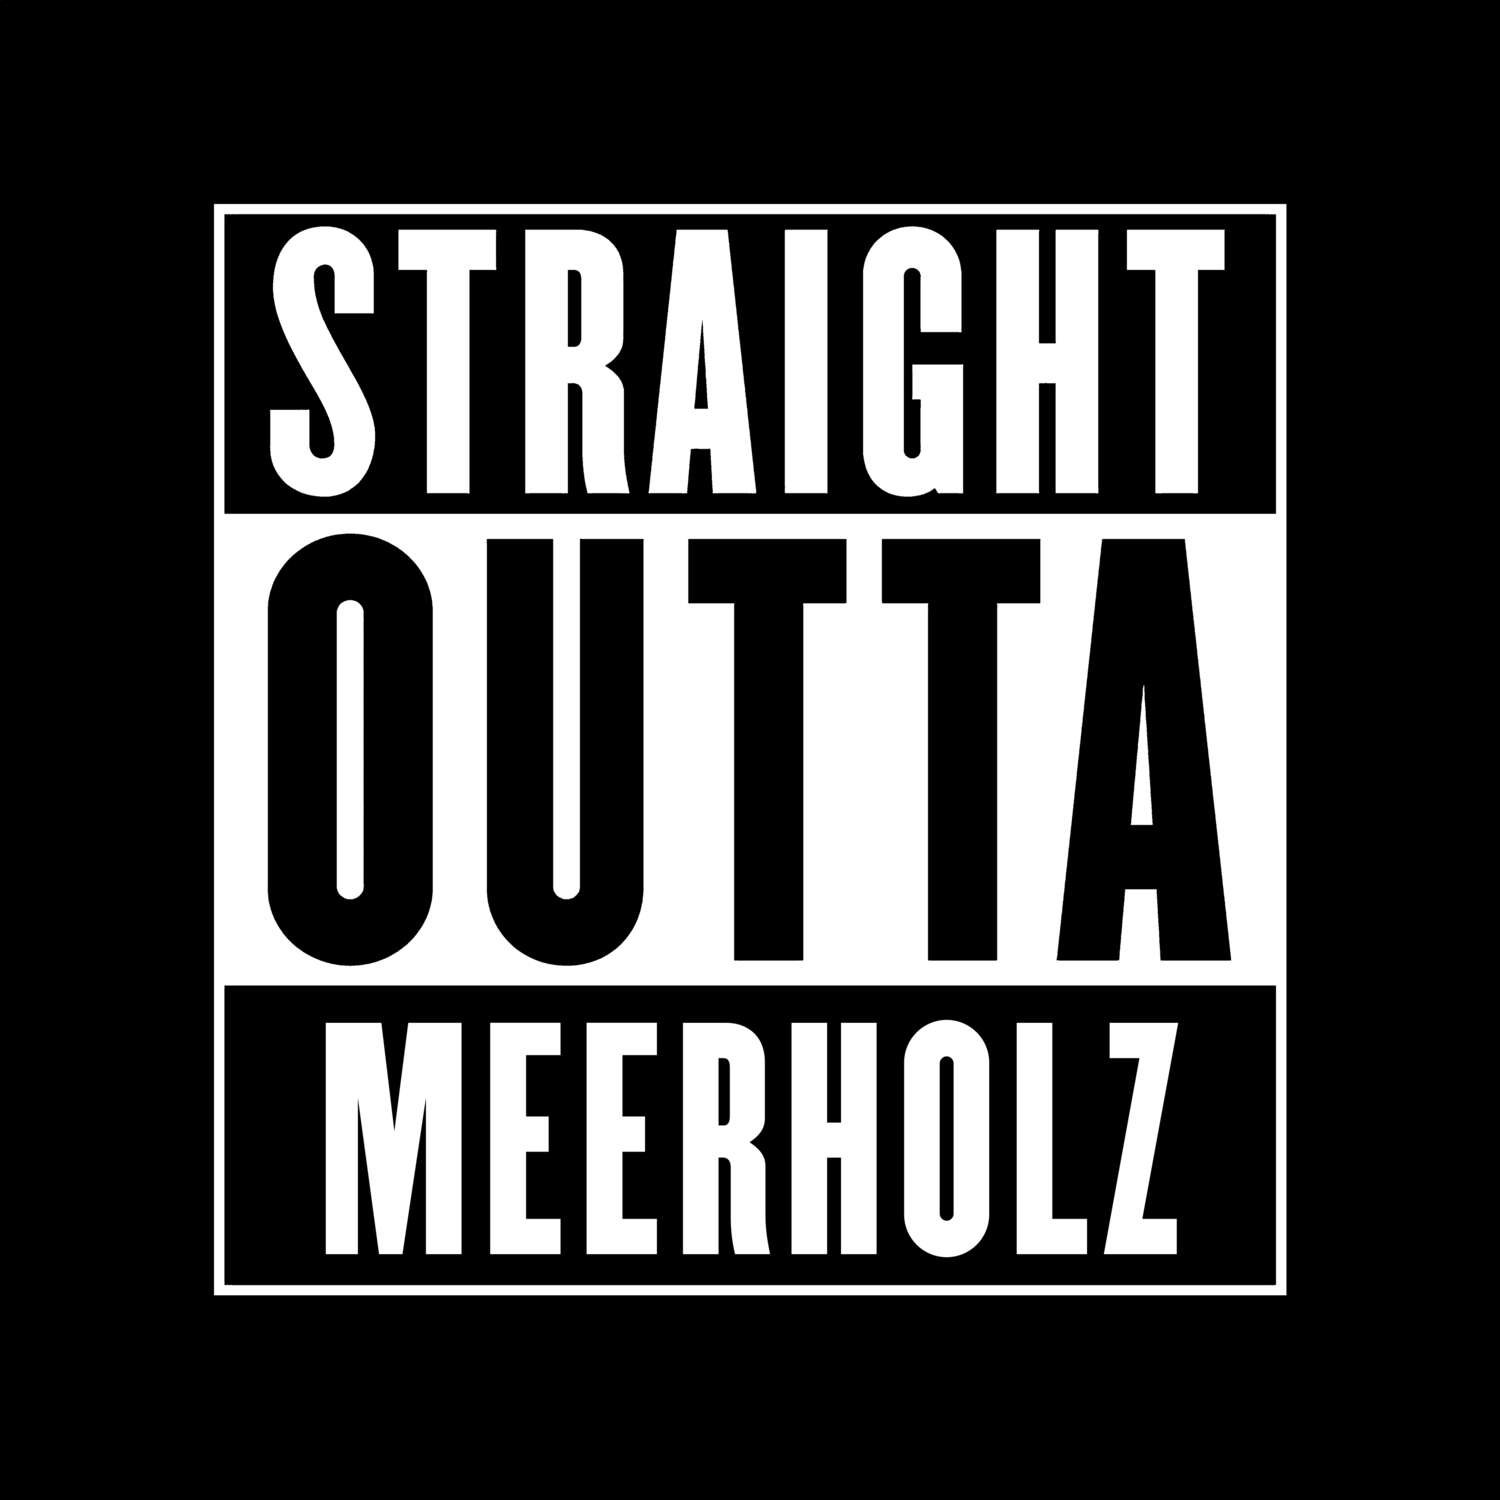 Meerholz T-Shirt »Straight Outta«